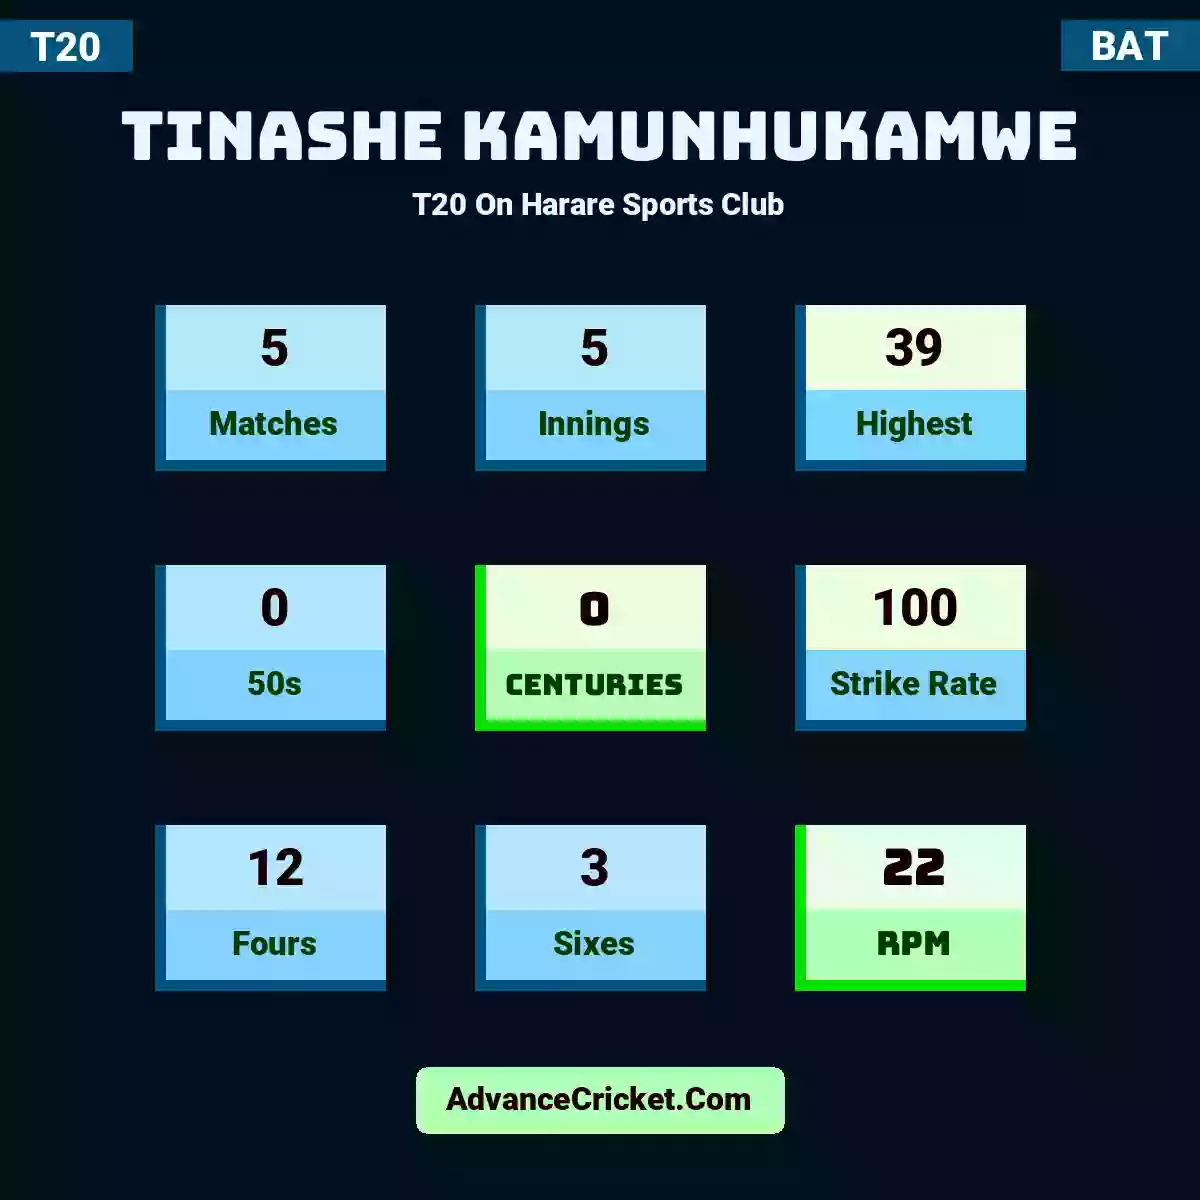 Tinashe Kamunhukamwe T20  On Harare Sports Club, Tinashe Kamunhukamwe played 5 matches, scored 39 runs as highest, 0 half-centuries, and 0 centuries, with a strike rate of 100. T.Kamunhukamwe hit 12 fours and 3 sixes, with an RPM of 22.